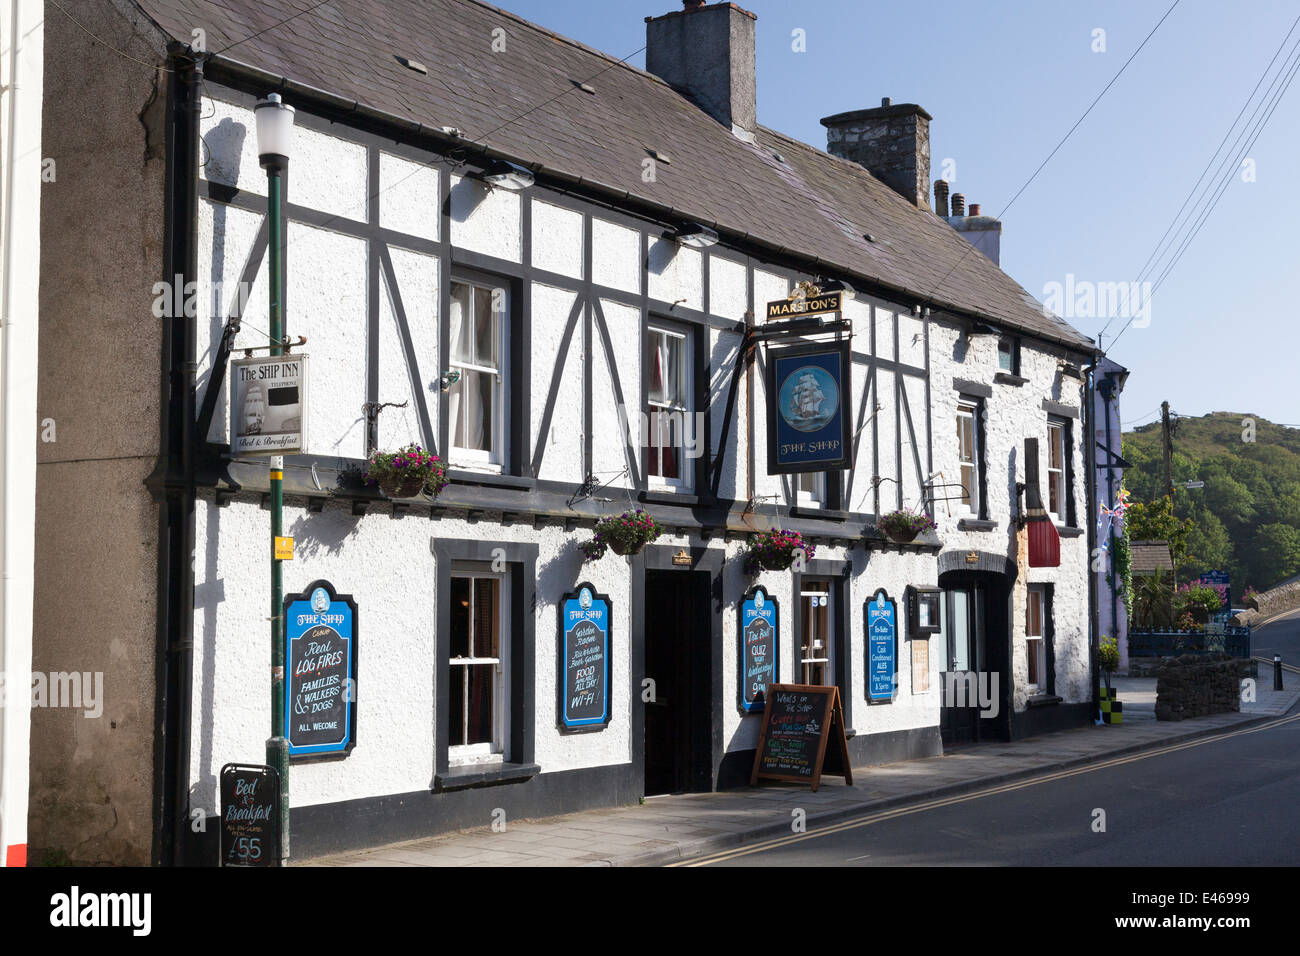 The Ship Inn, Solva, Pembrokeshire Stockfoto